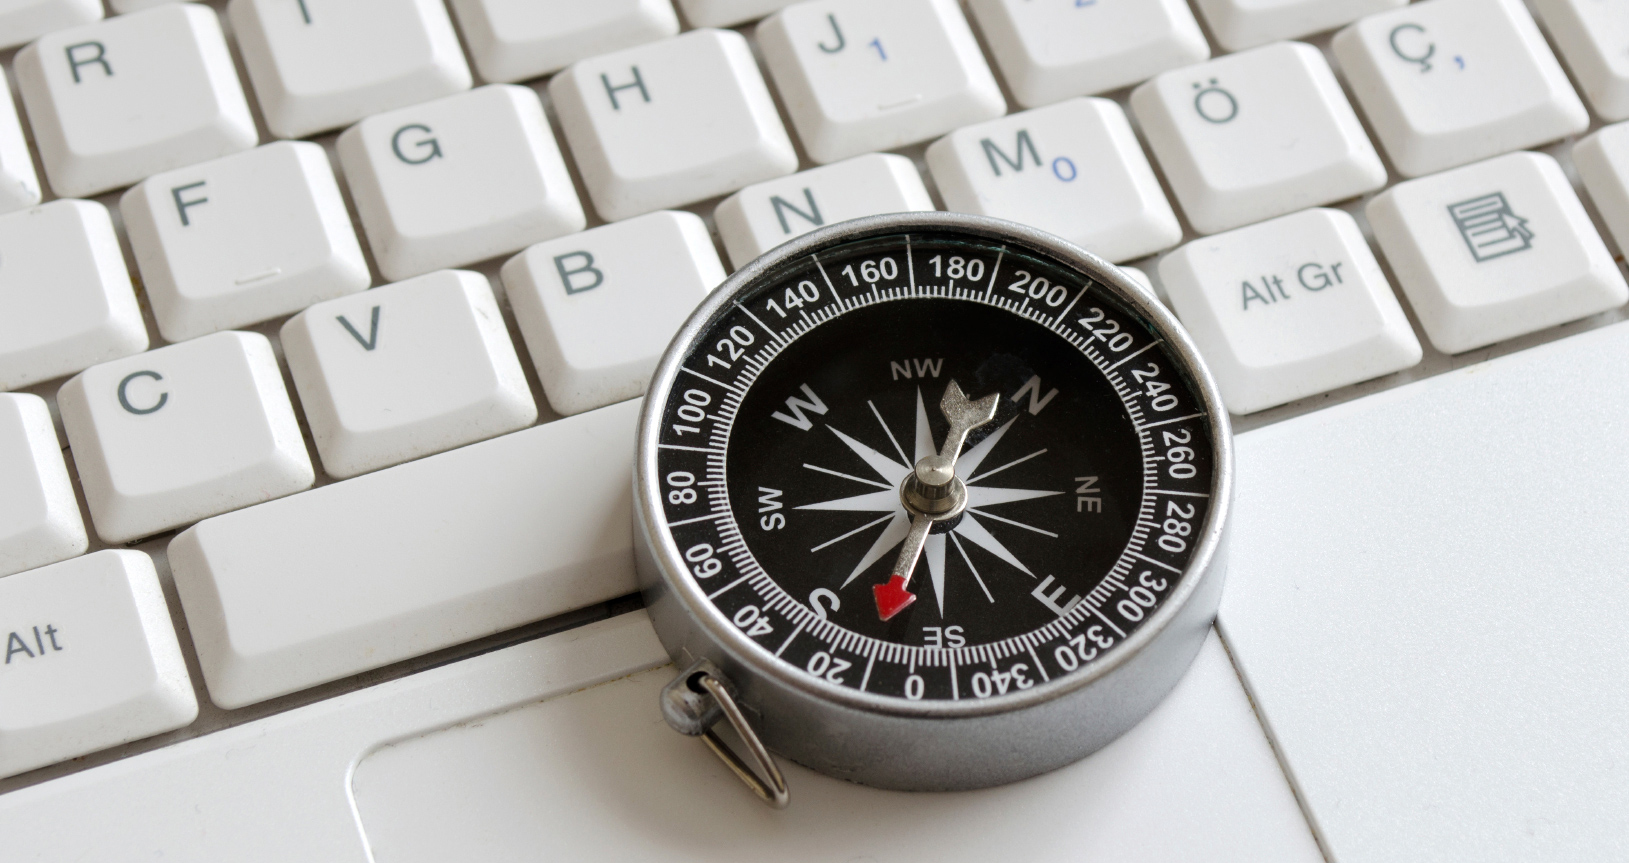 A compass on a keyboard demonstrating web navigation